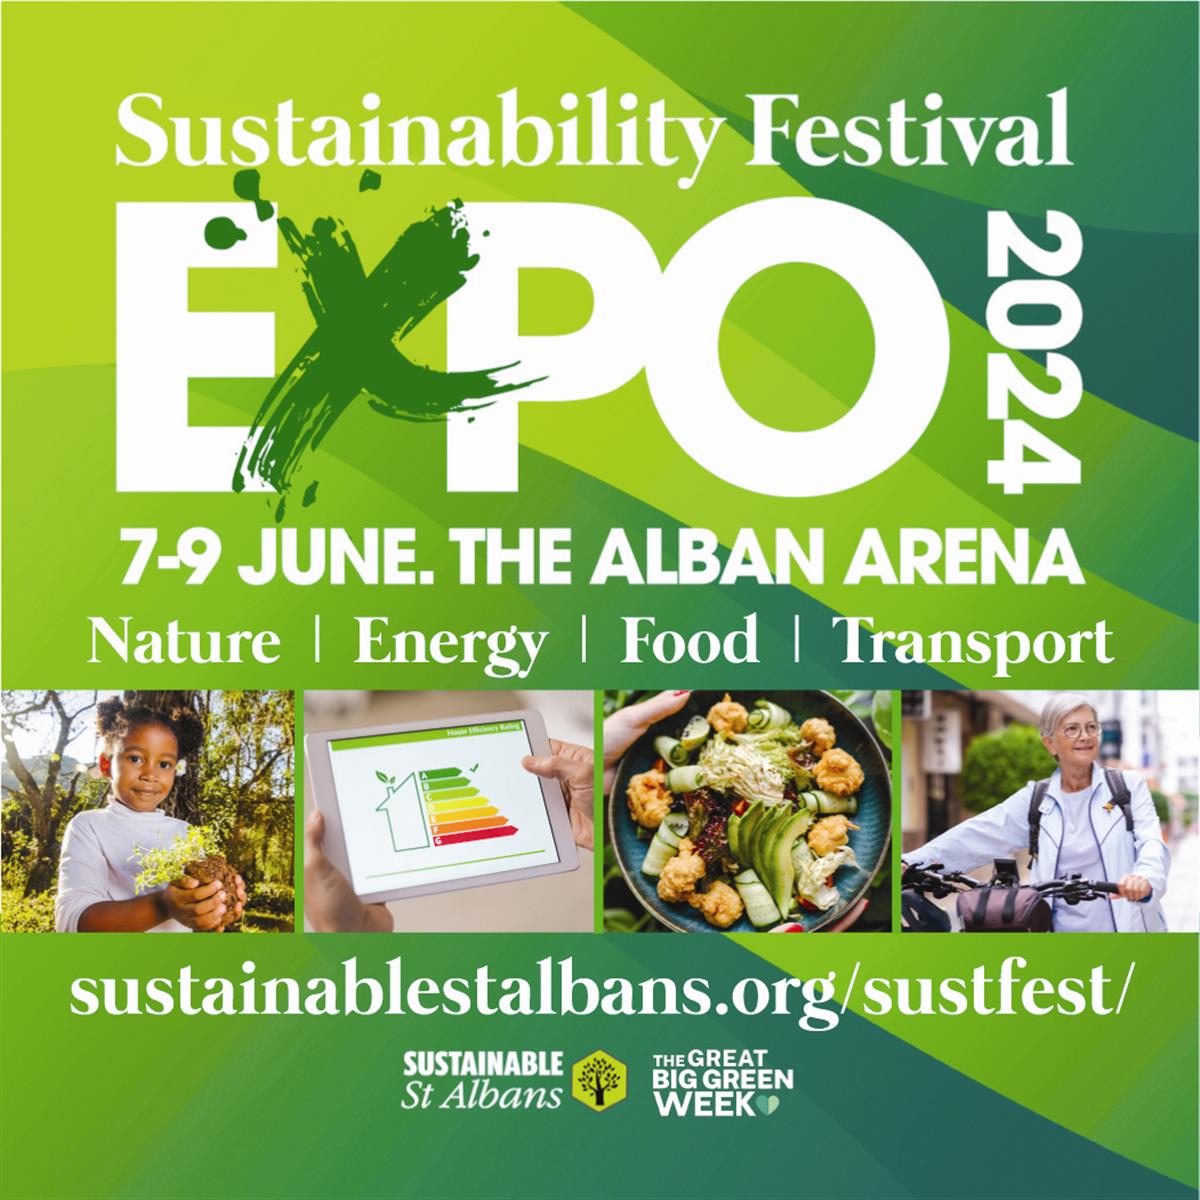 Sustainability Festival Expo